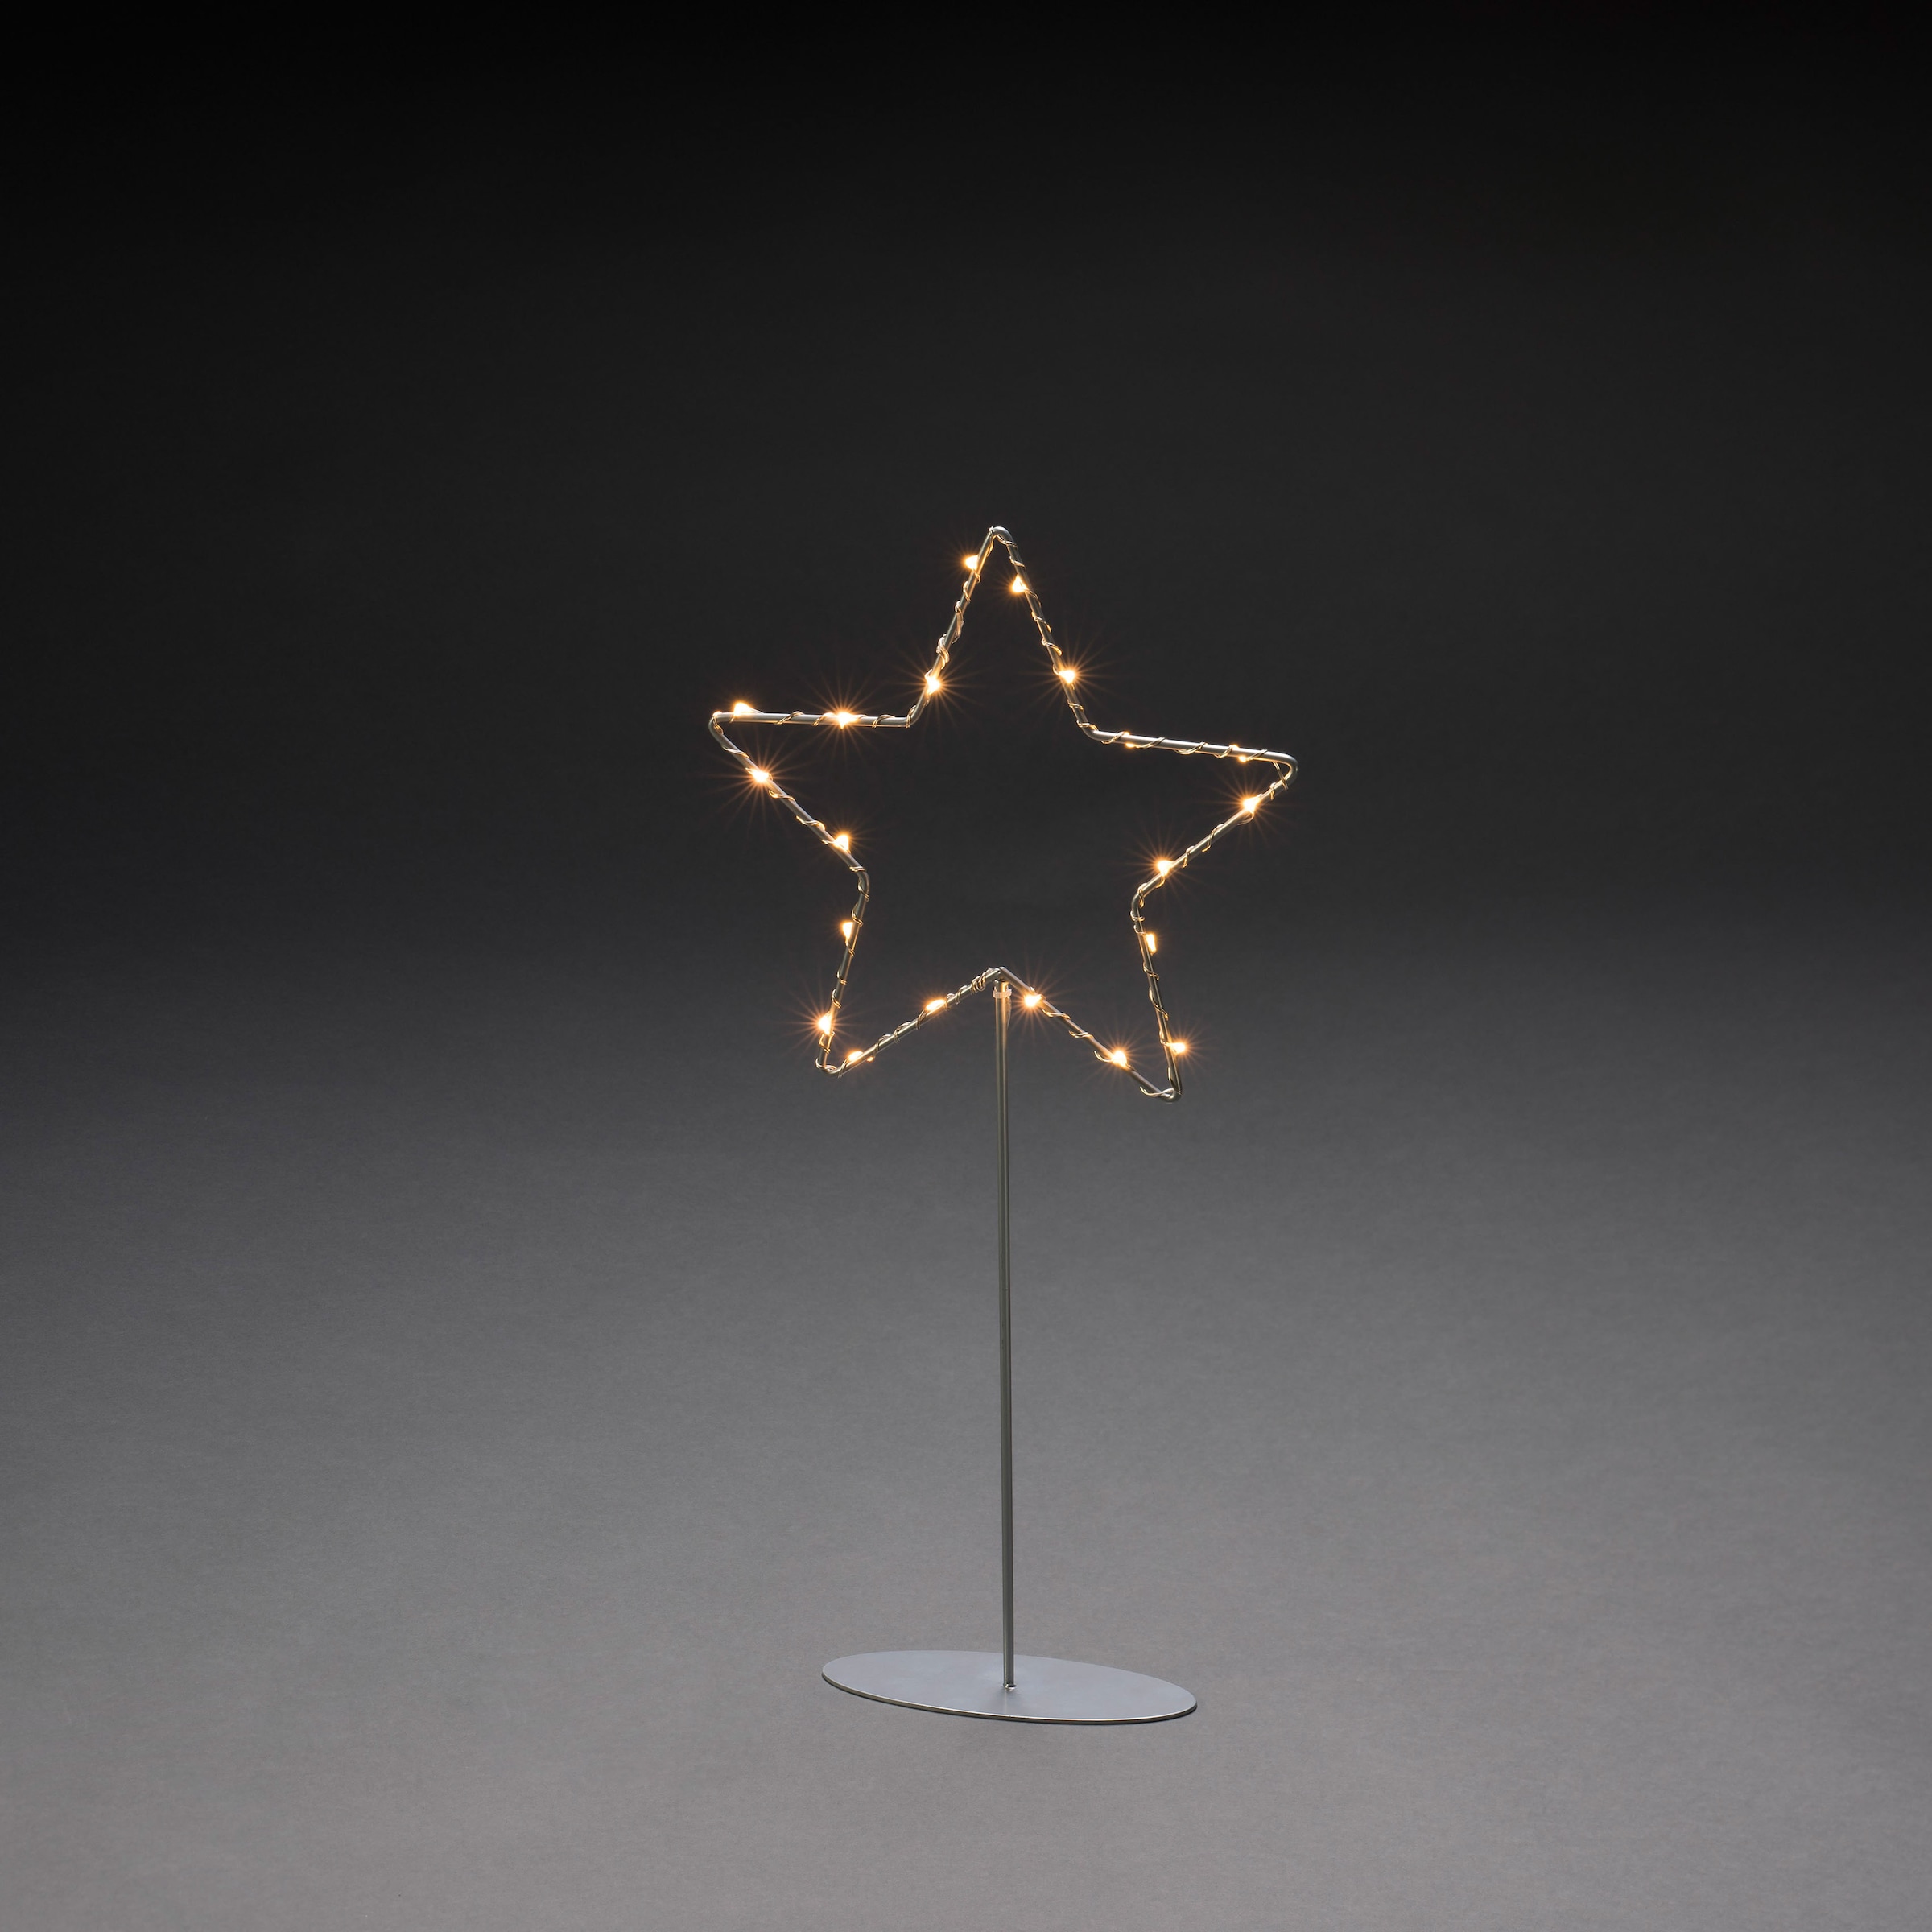 KONSTSMIDE LED Stern »Weihnachtsstern, Weihnachtsdeko«, 20 flammig, Leuchtmittel LED-Modul | LED fest integriert, LED Metallstern m. Metall-Fuß, sfb. lackiert, mit sfb. Draht umwickelt